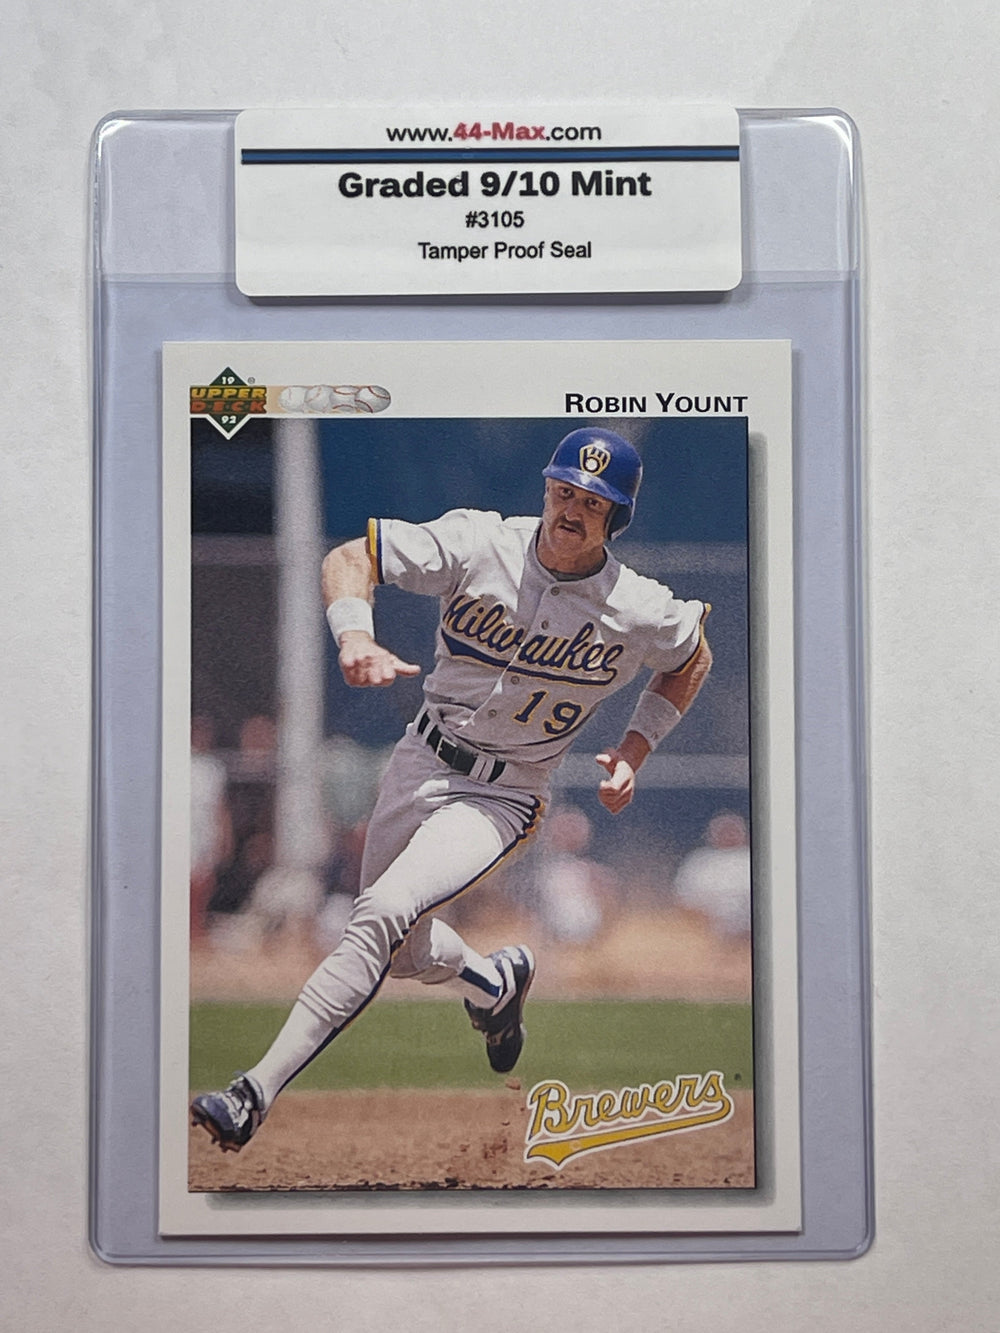 Robin Yount 1992 Upper Deck Baseball Card. 44-Max 9/10 MINT #3105